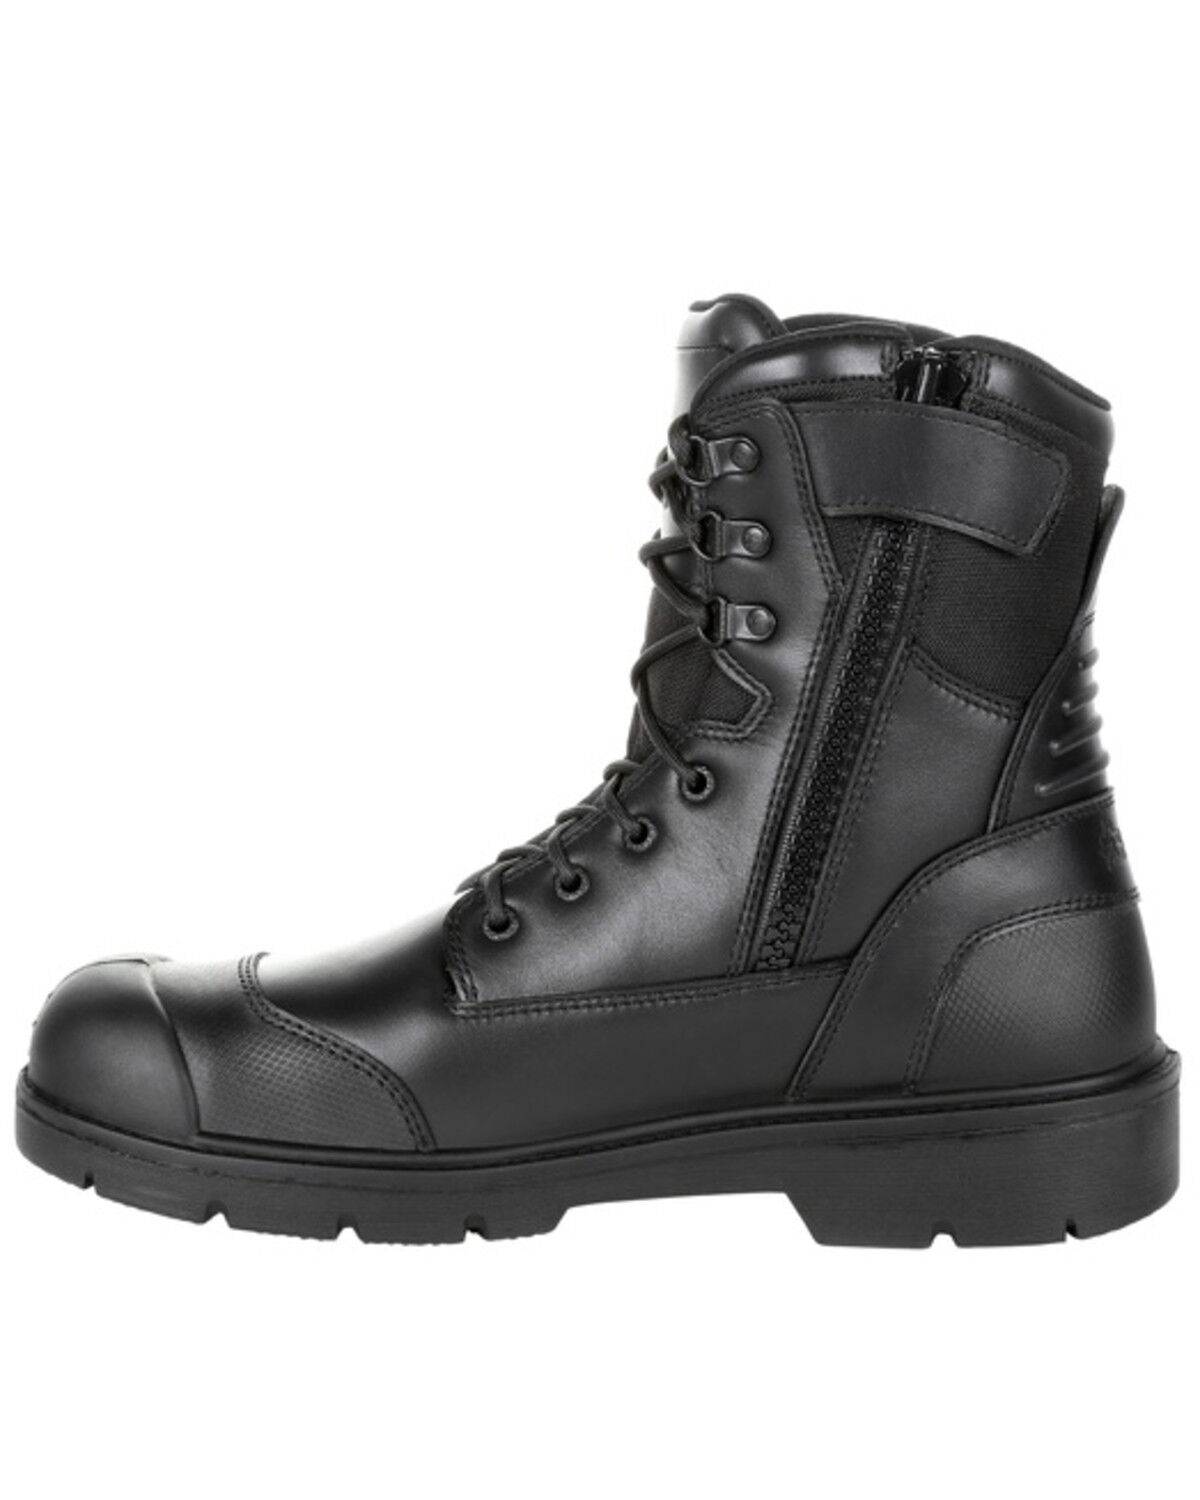 black steel toe waterproof work boots